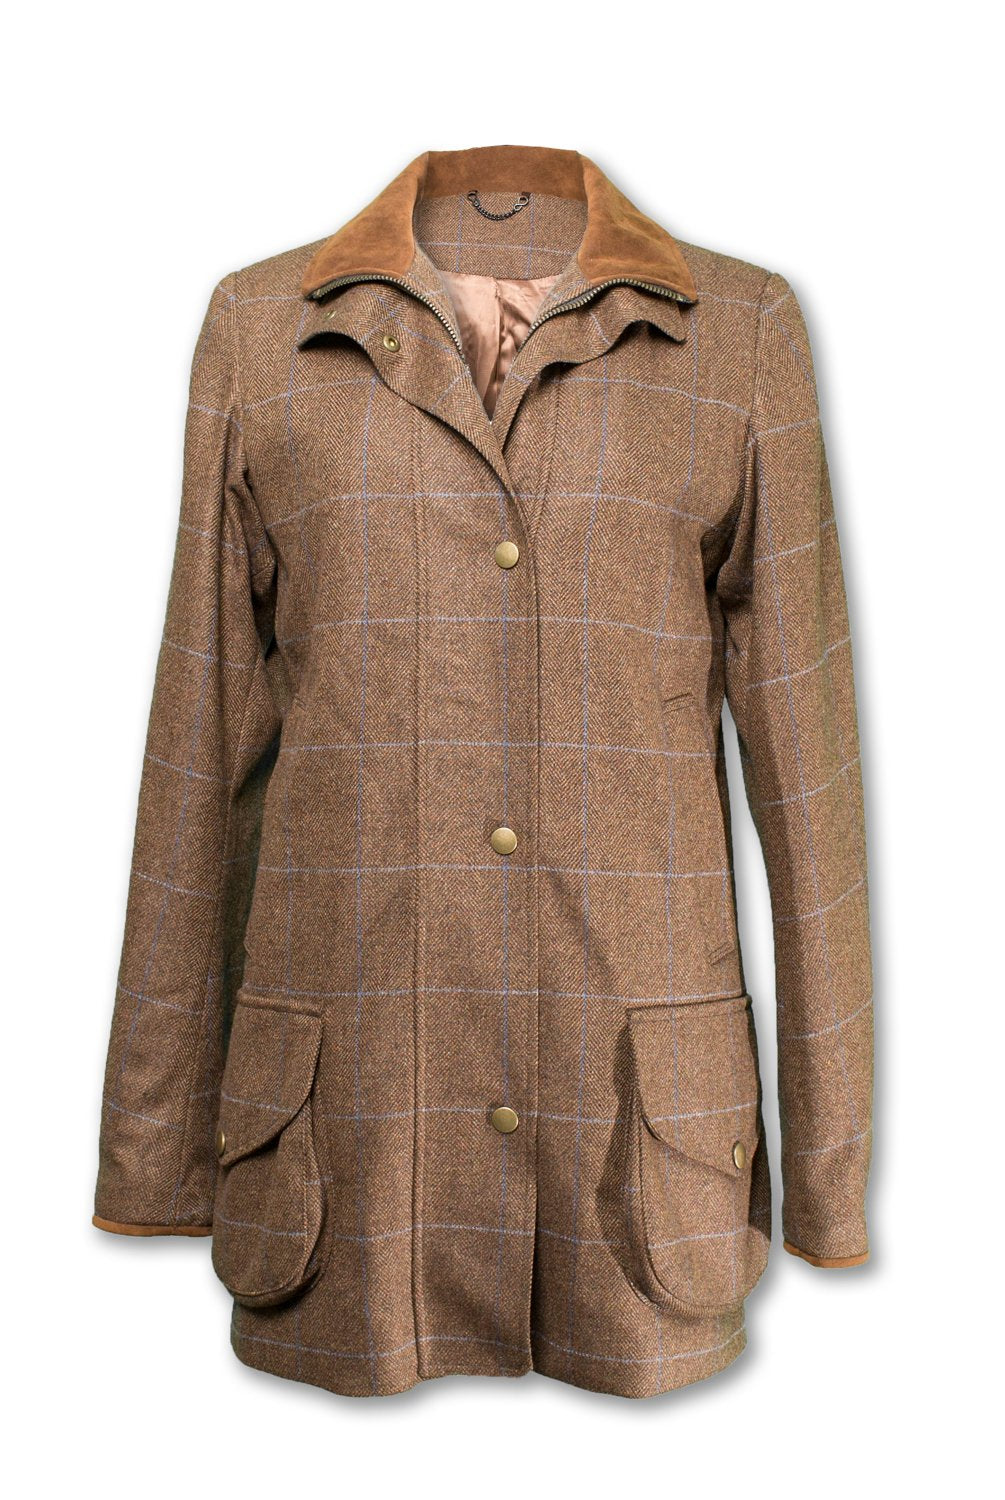 Made to Order Tweed Field Coats - BARRINGTON AYRE SPORT